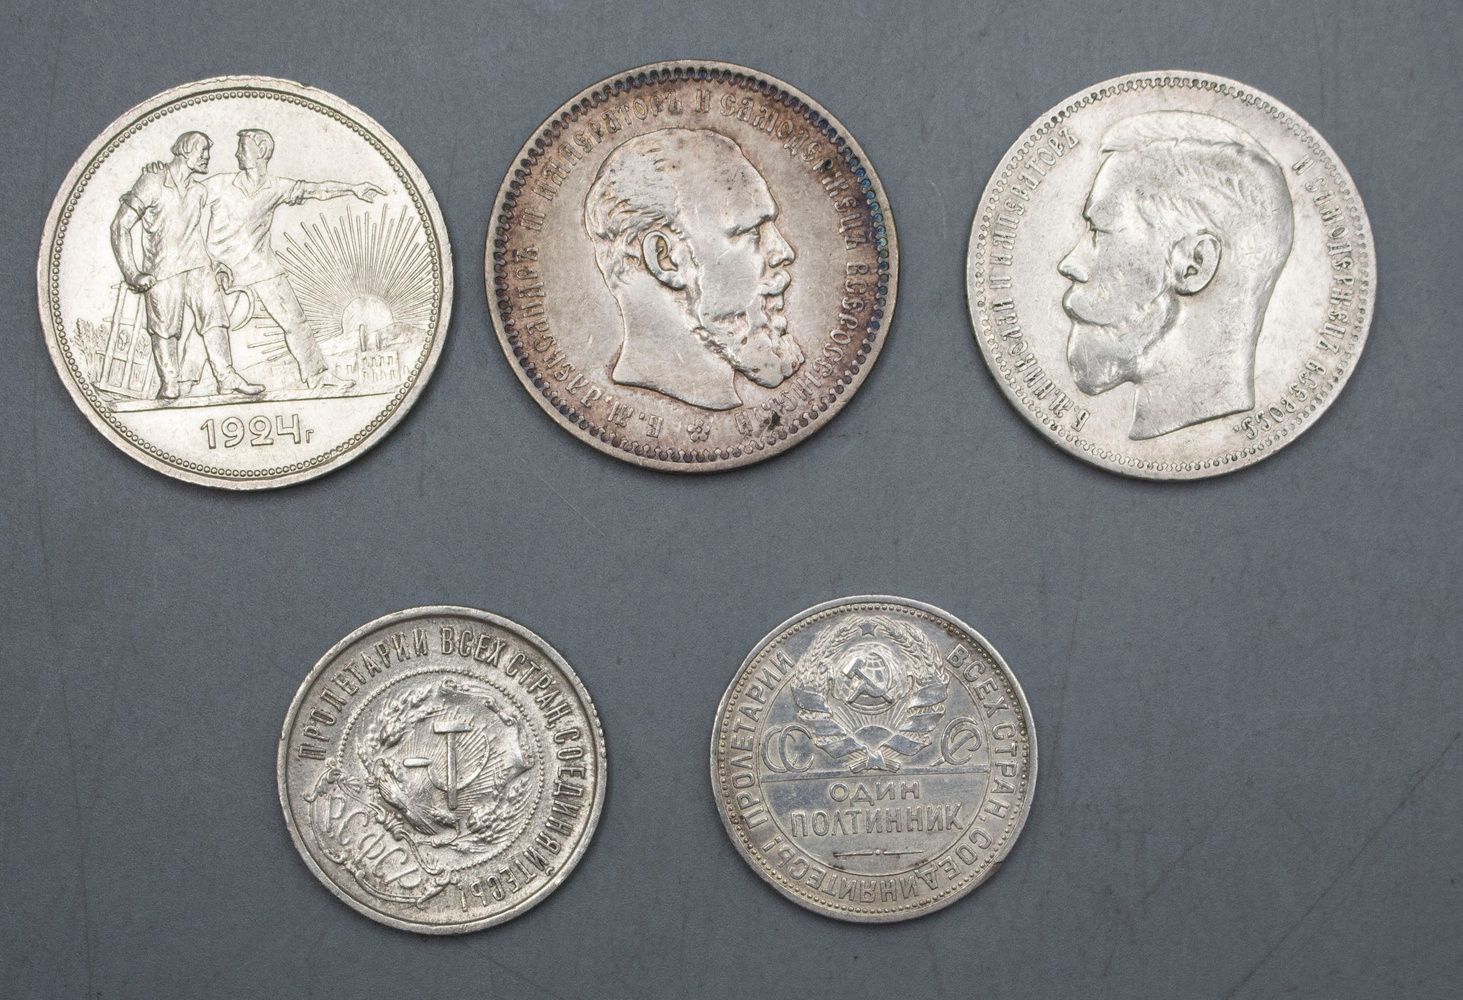 Sammlung Russische Münzen / A collection of Russian coins Composé de :
* 1 roubl&hellip;